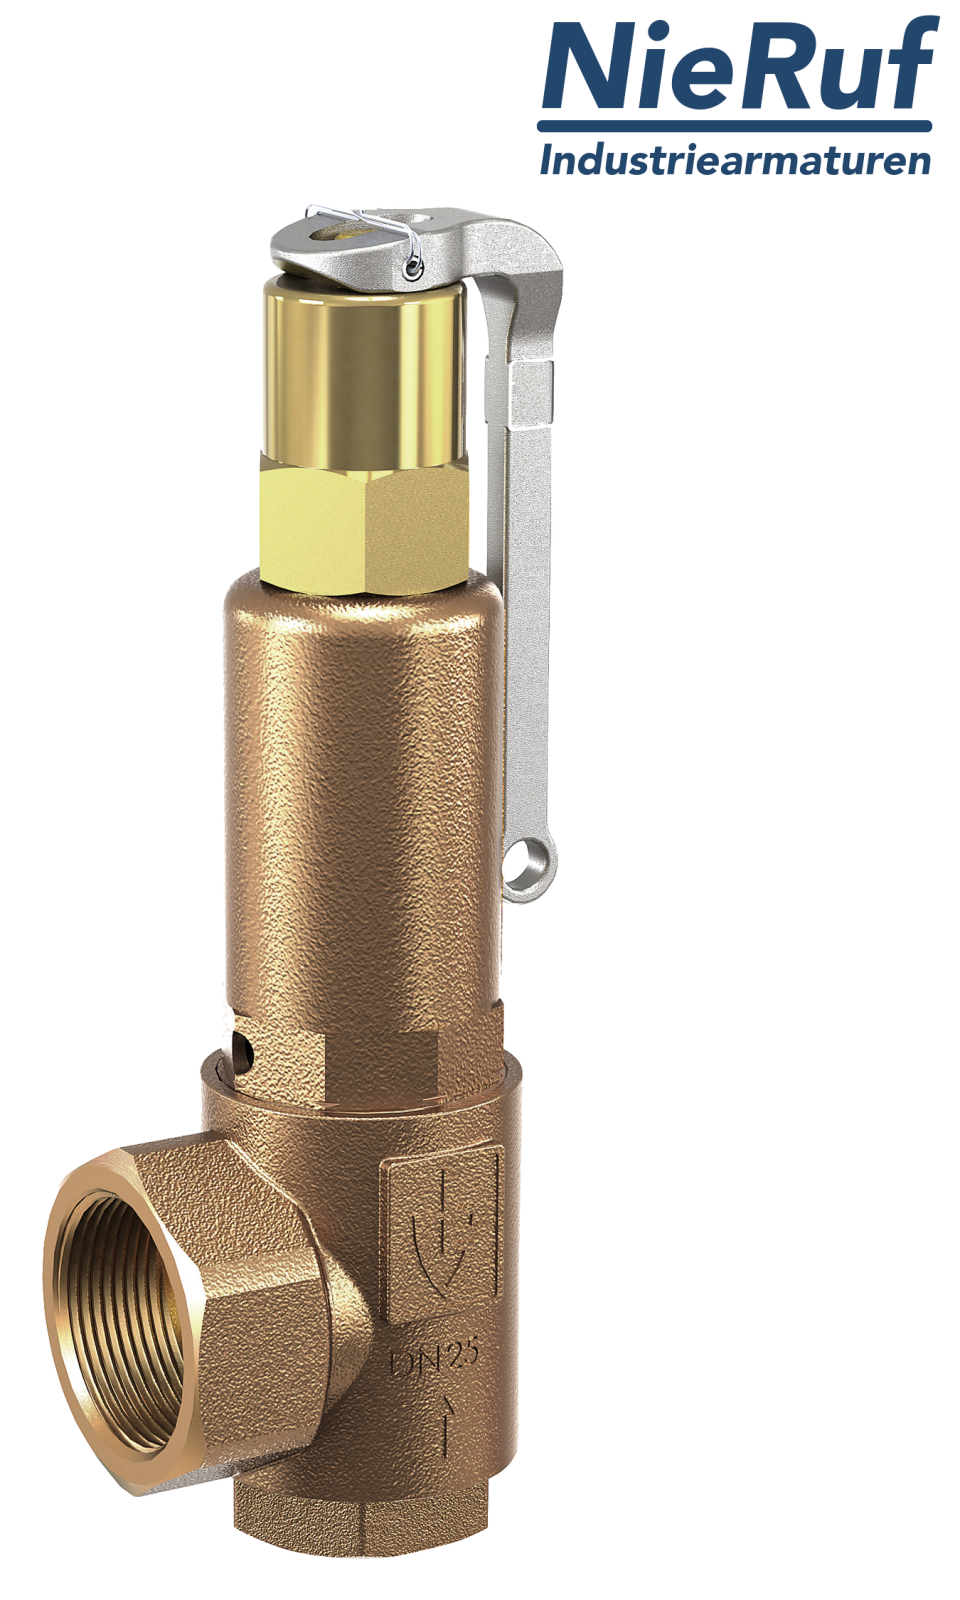 safety valve 1" x 1 1/2" fm SV07 neutral gaseous media, gunmetal FKM, with lever